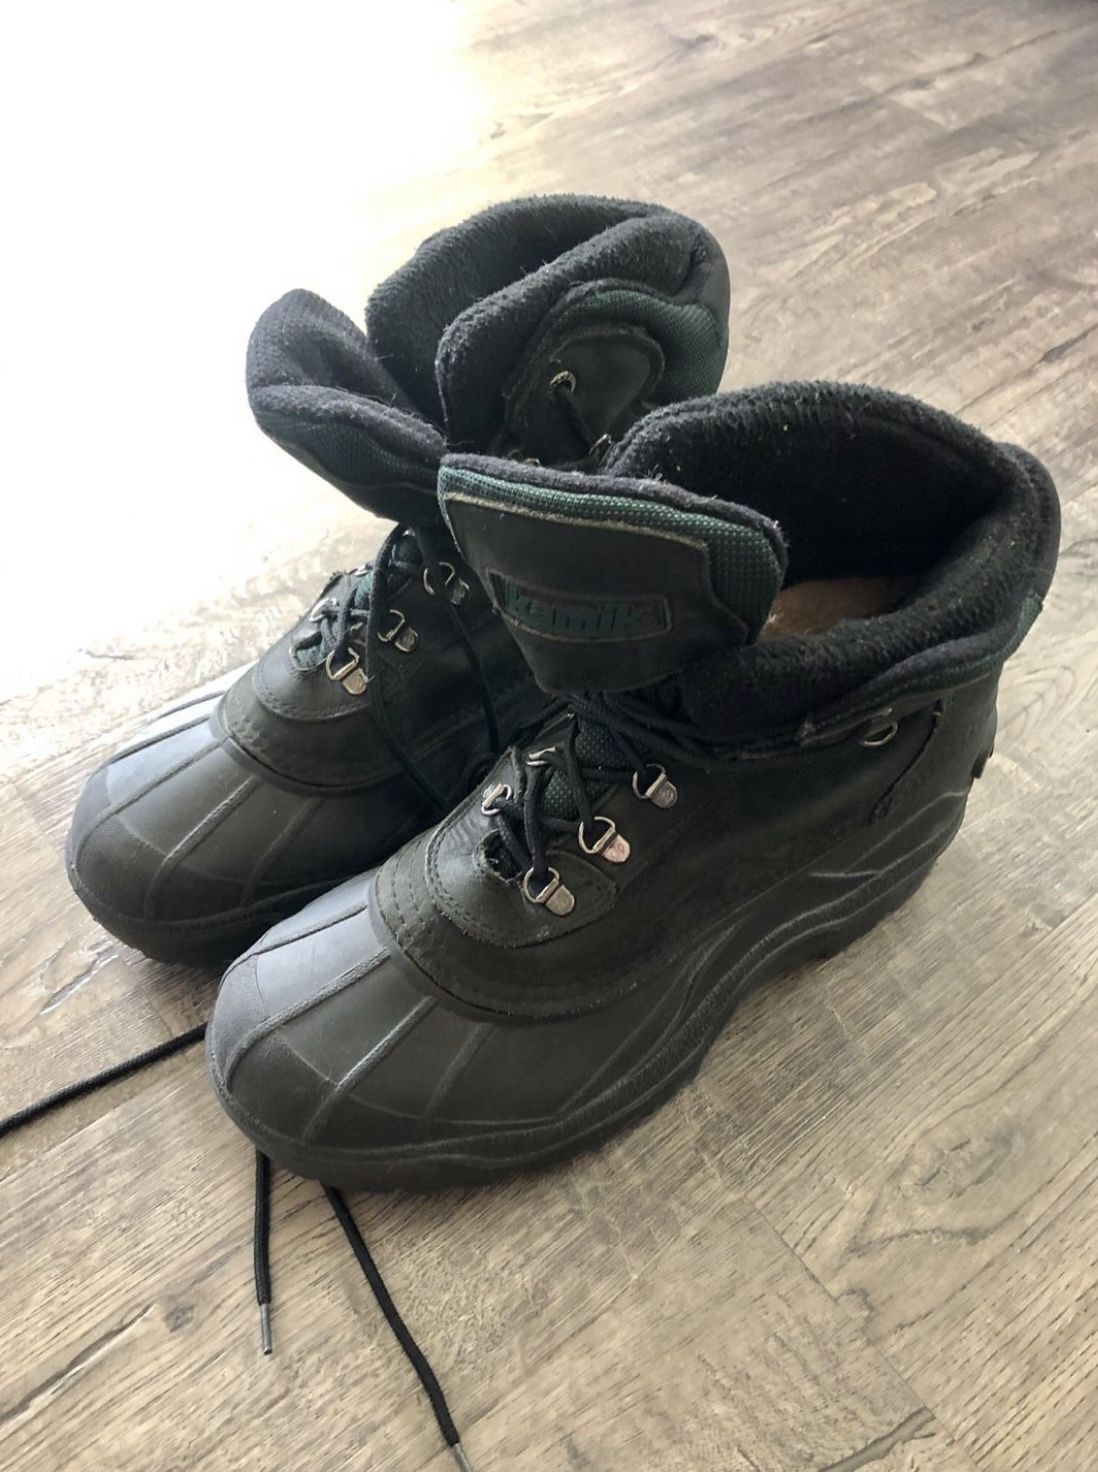 Kamik Rain Boots - Size 9